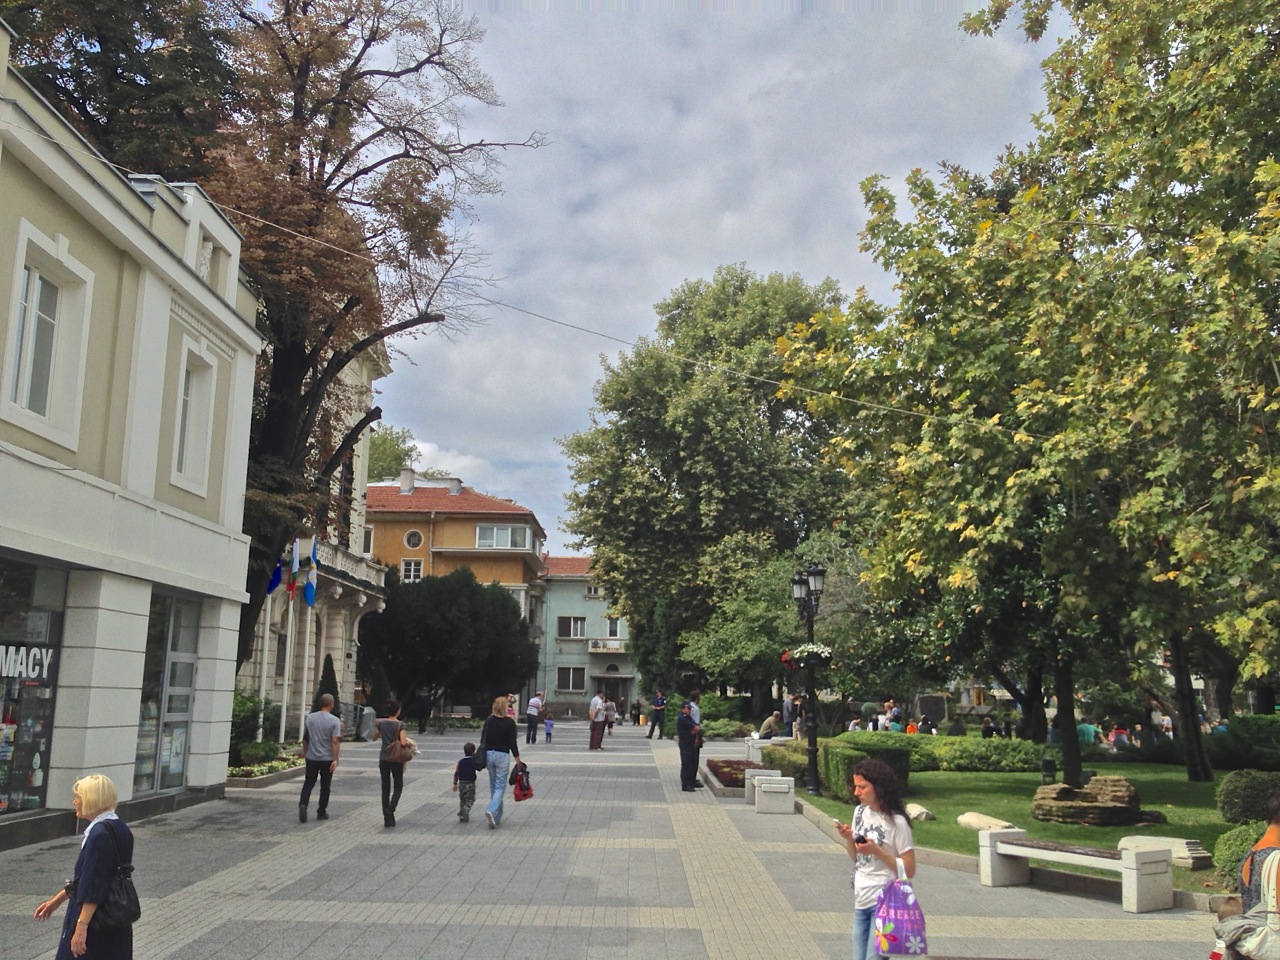 Somewhere in Plovdiv